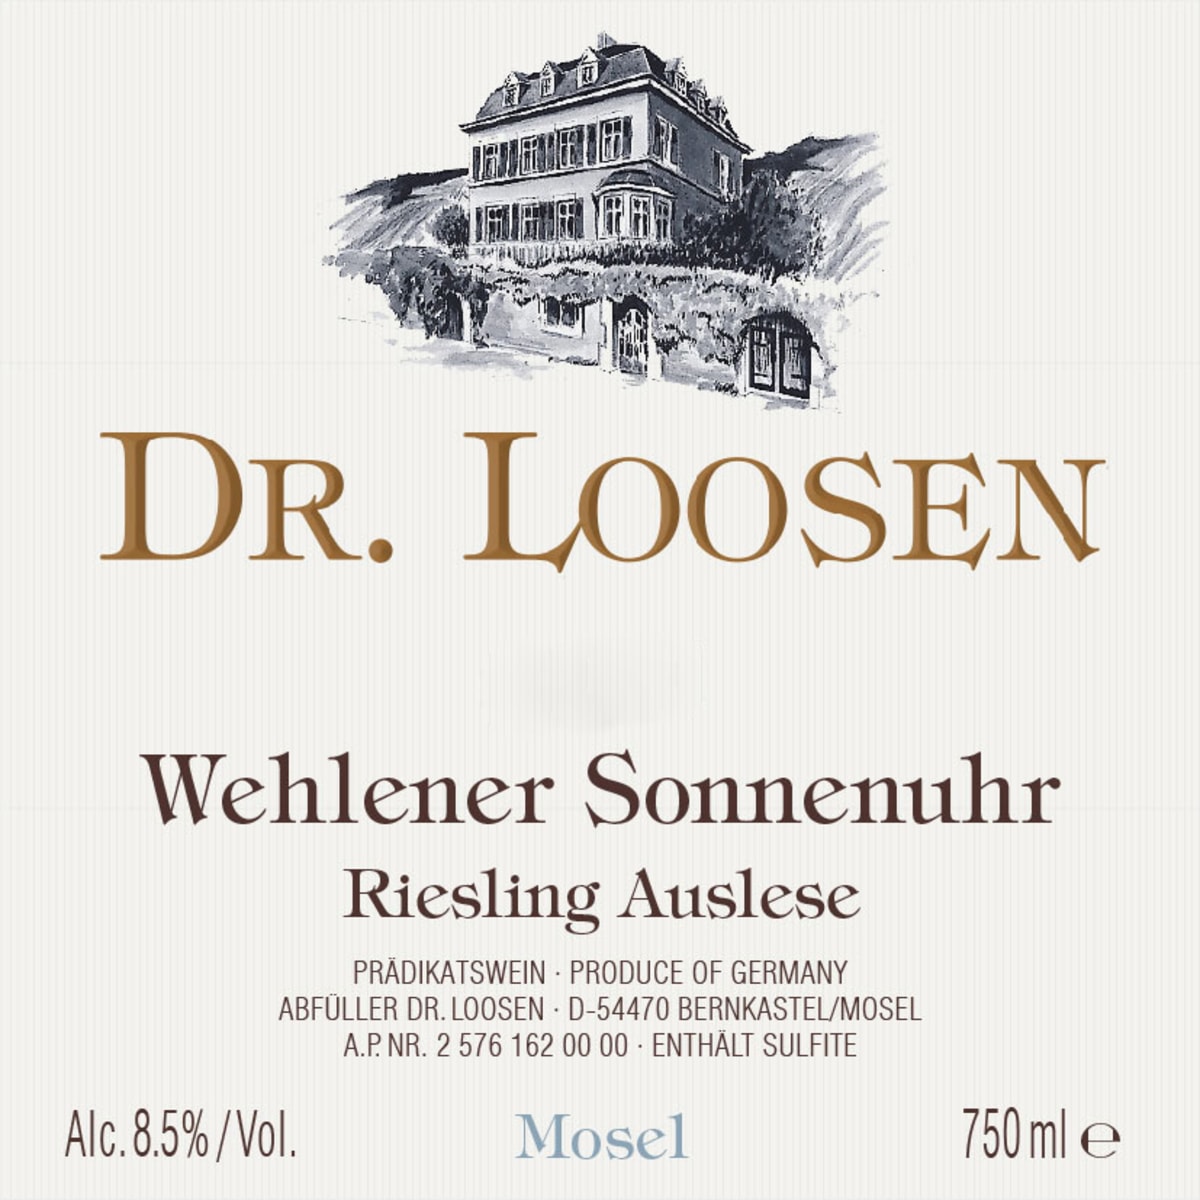 Dr. Loosen Wehlener Sonnenuhr Riesling Auslese 2014 Front Label